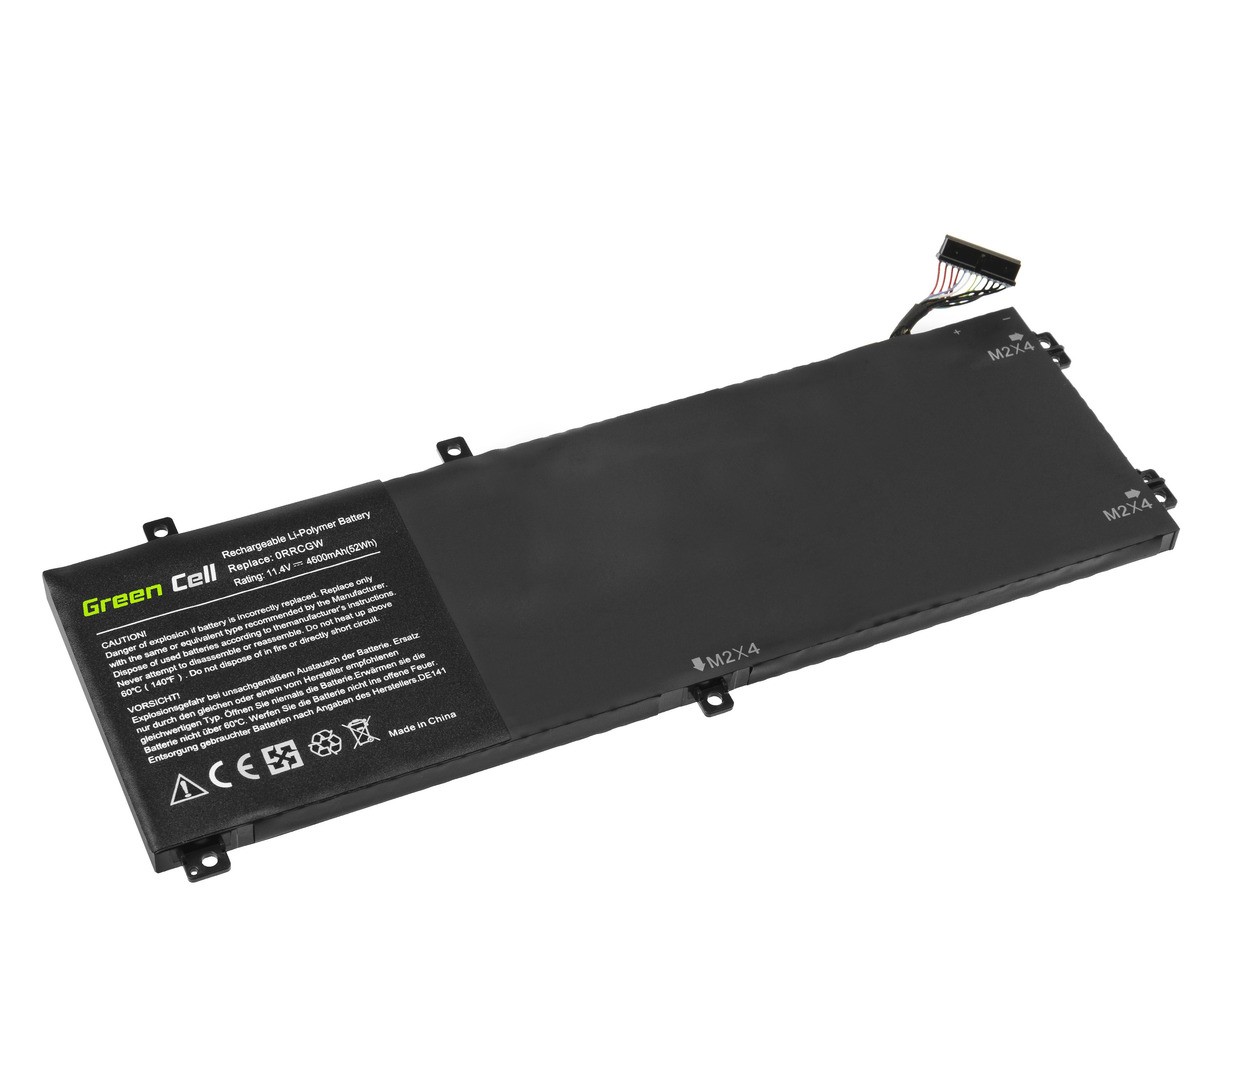 Baterija RRCGW za Dell XPS 15 9550, Precision 5510 - 11,4V 4600mAh